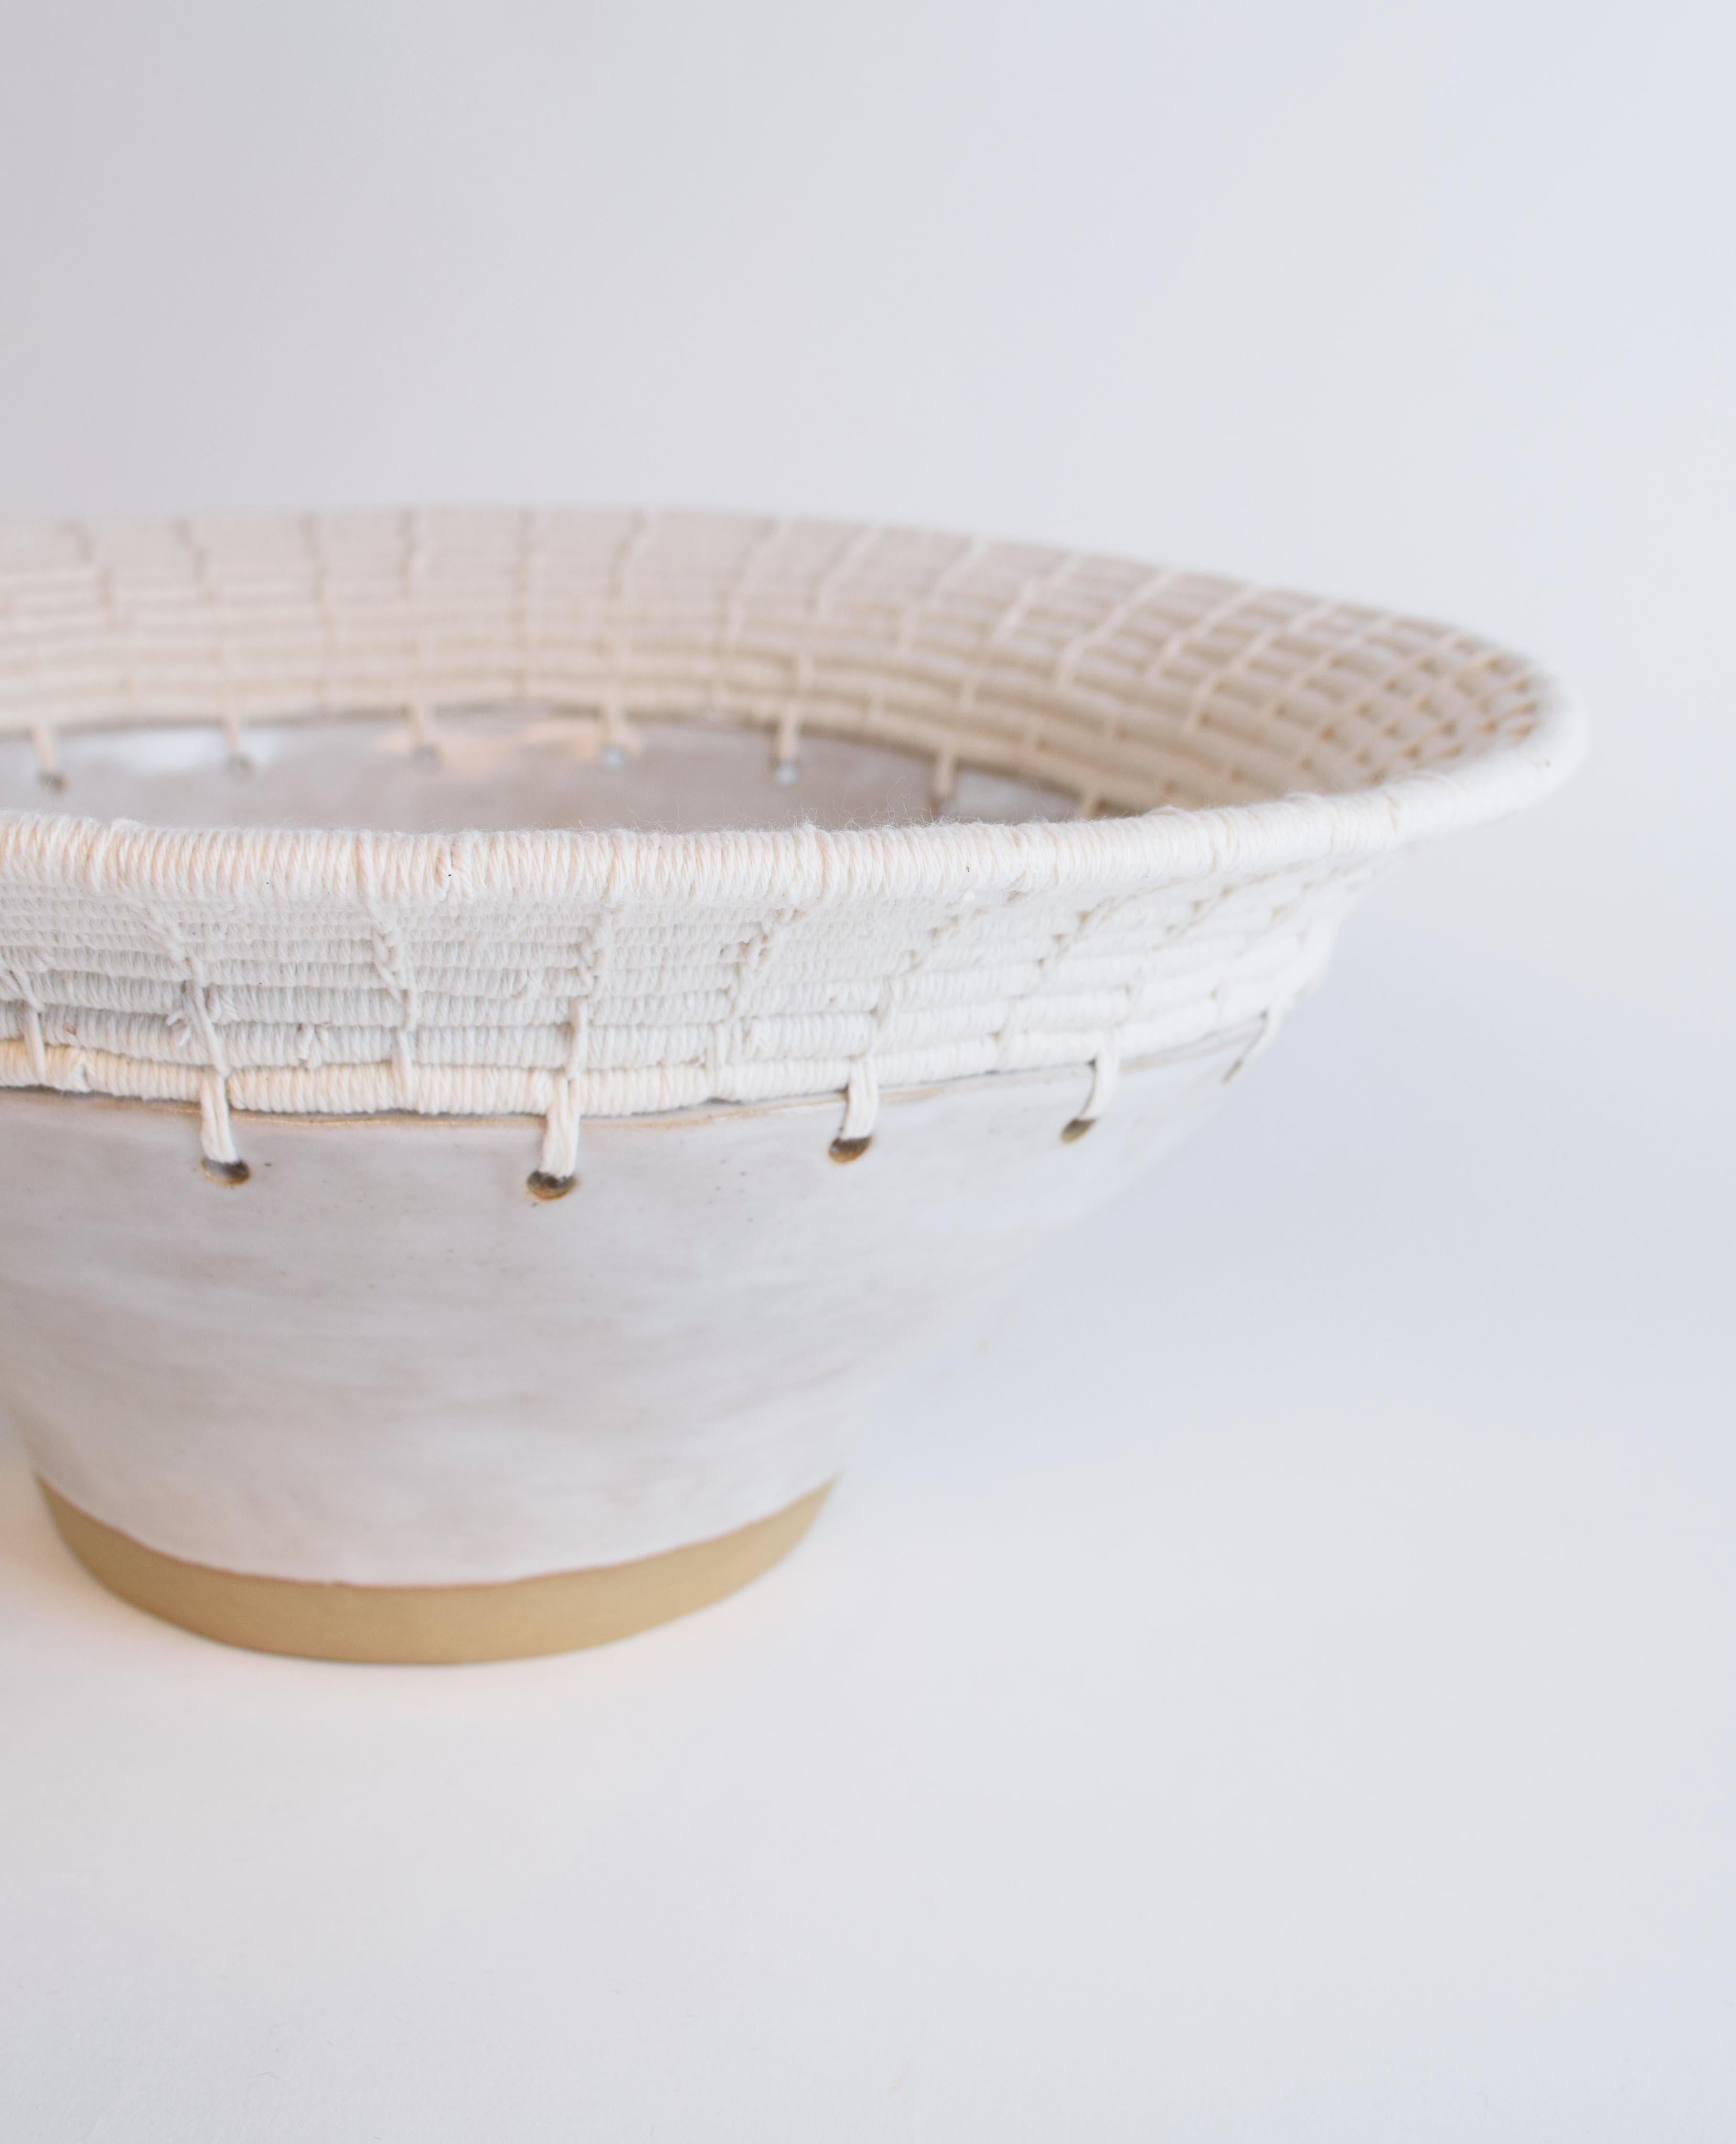 Organic Modern One of a Kind Handmade Ceramic Bowl #807, White Glaze & Woven Cotton Upper